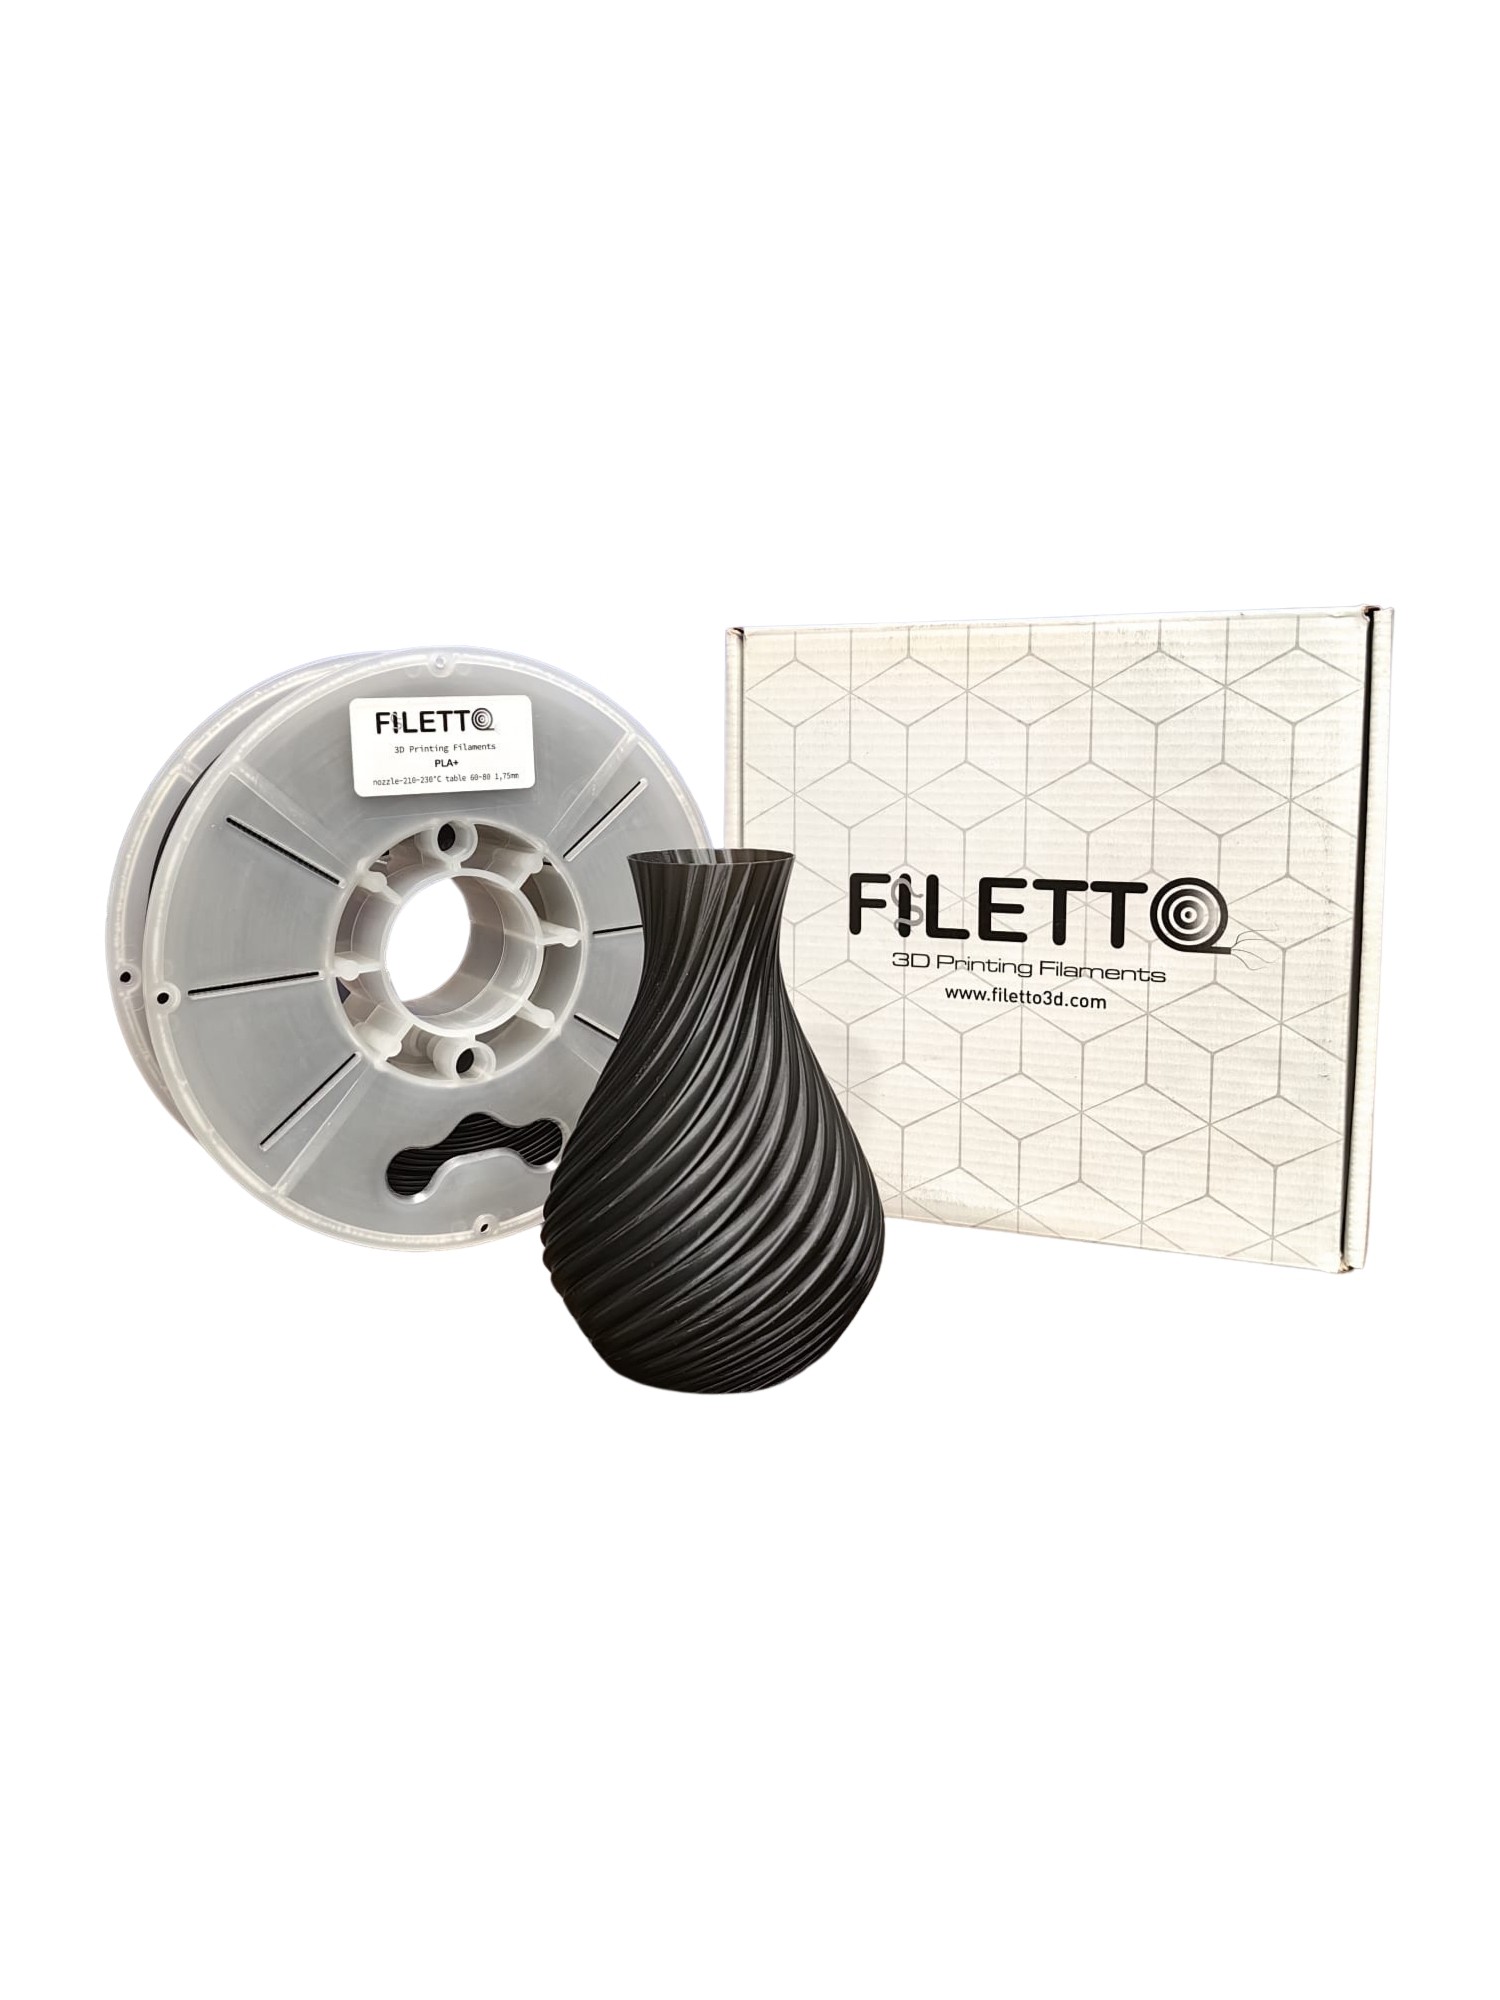 Filetto Pla+ Filament 1.75mm 1KG - Matte Black